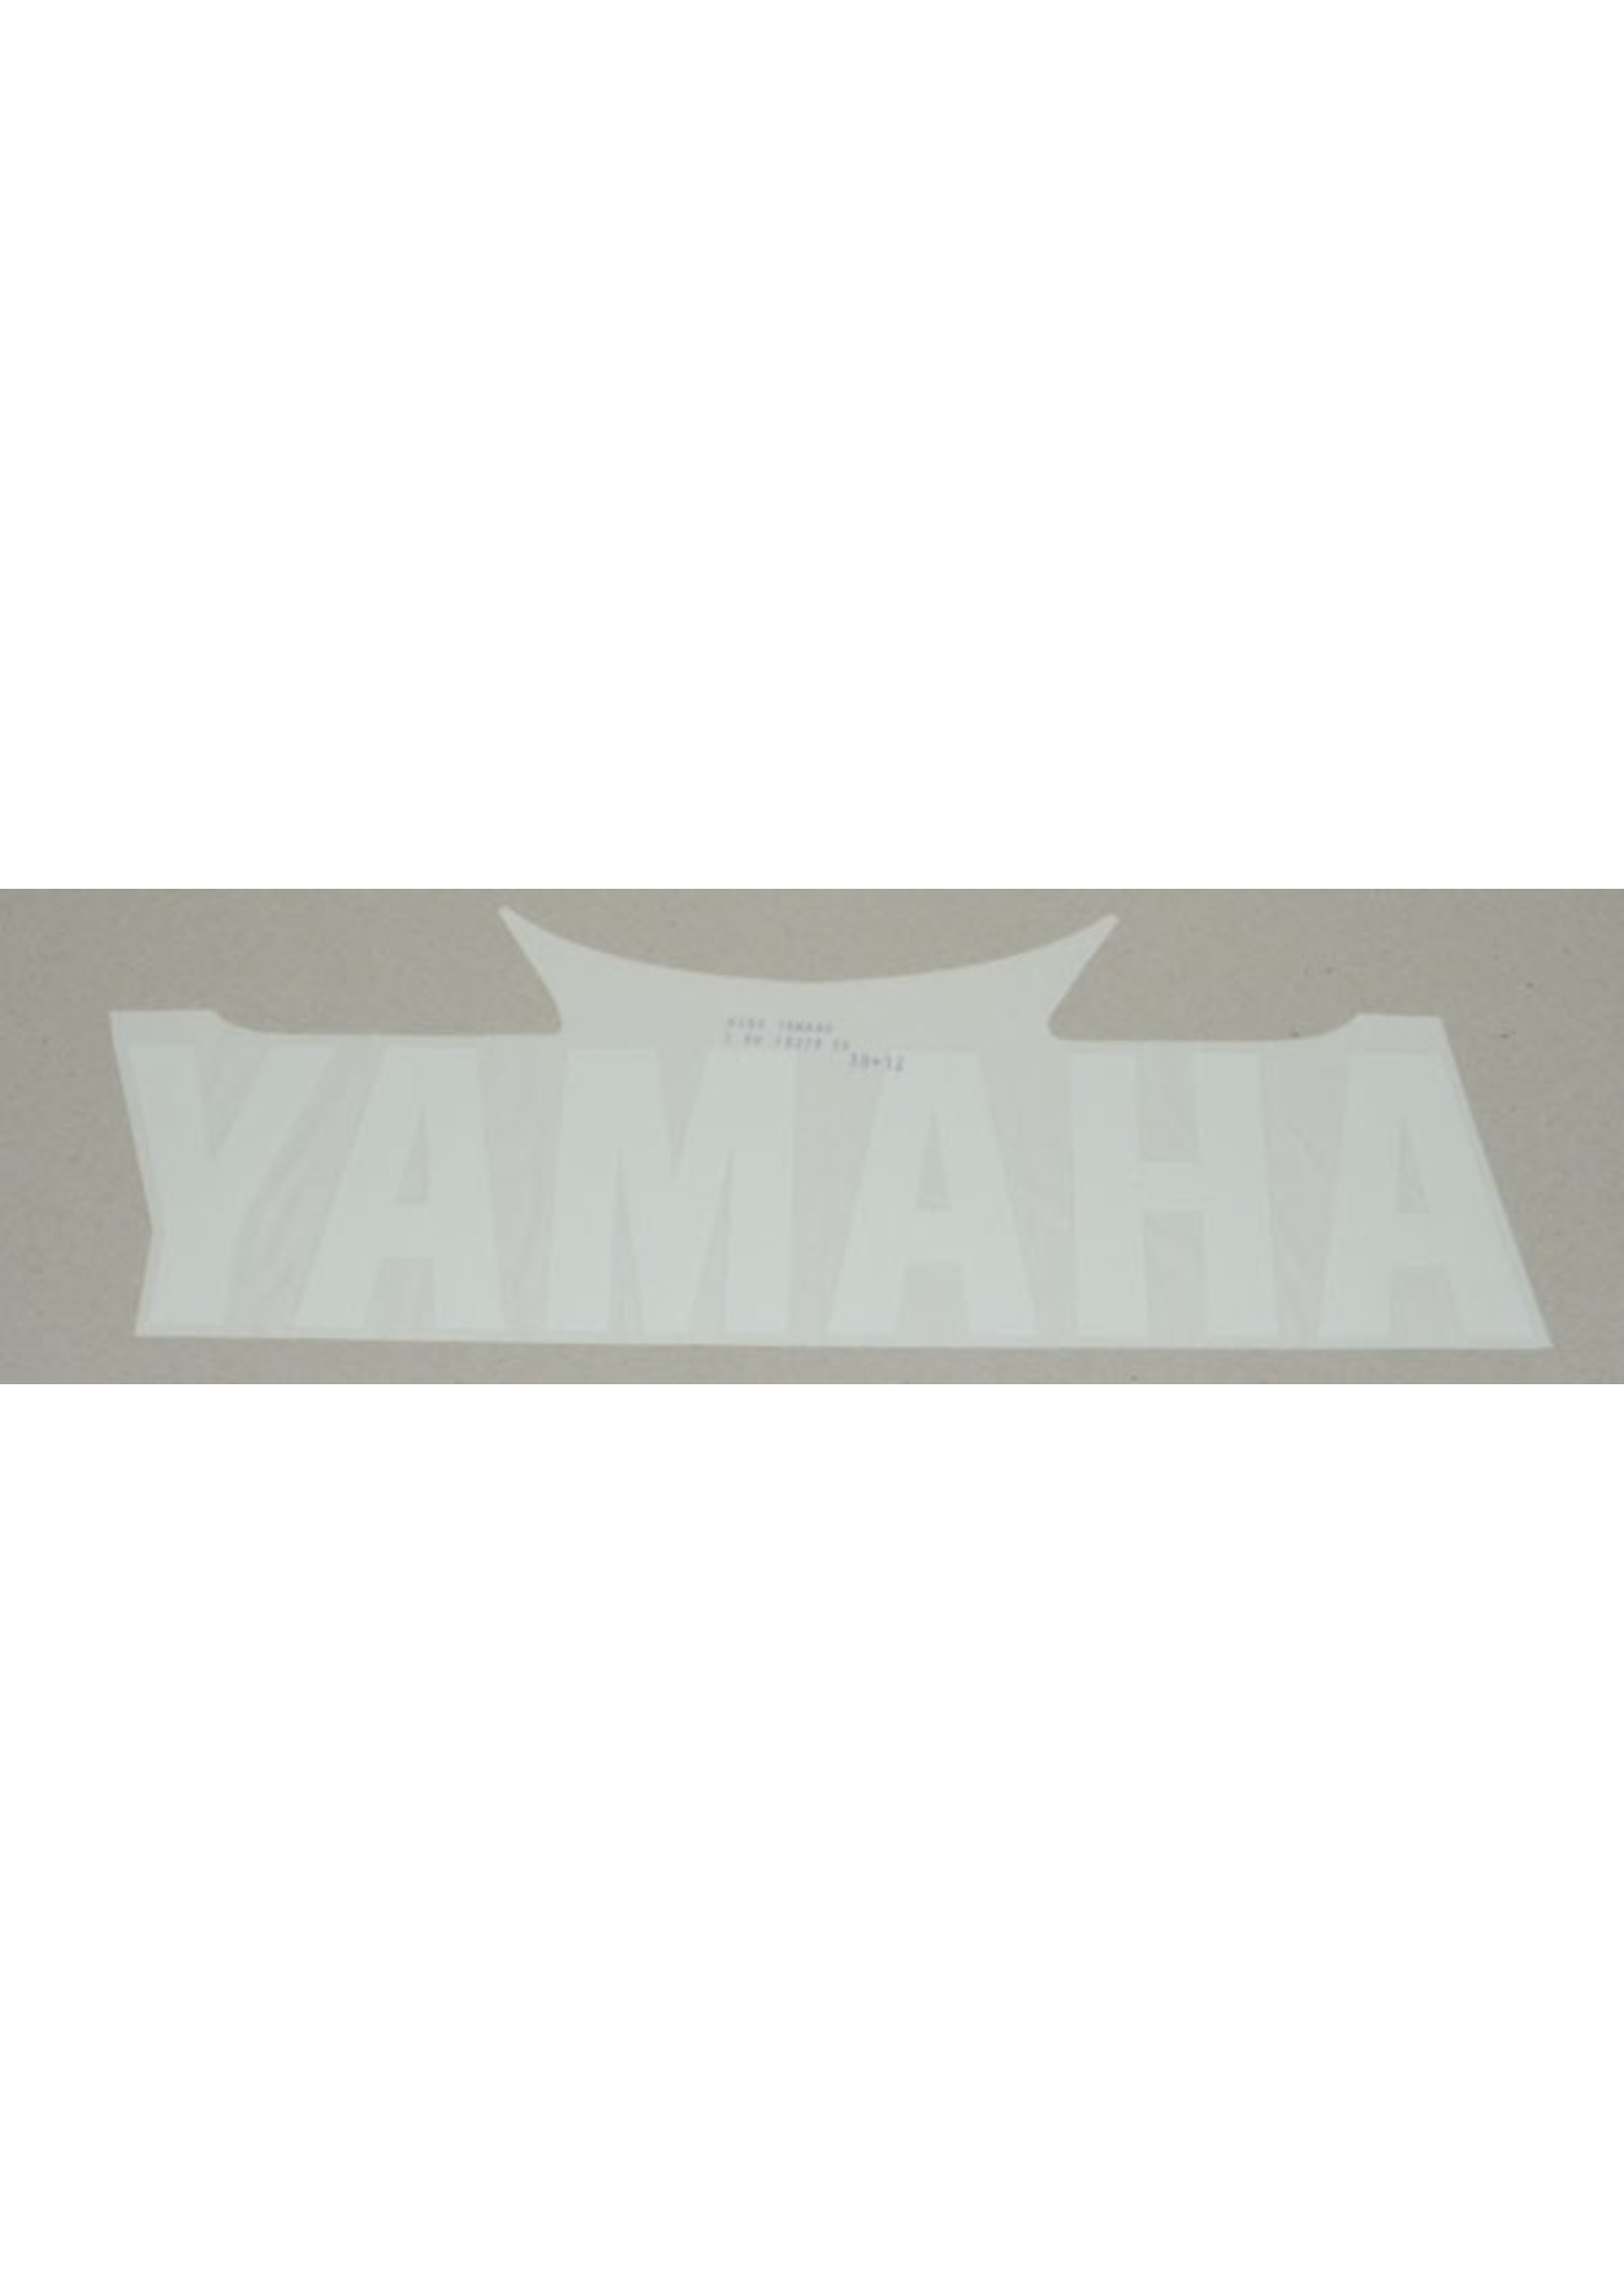 Yamaha sticker yamaha woord [yamaha] onderspoiler wit orig 5brf83280000